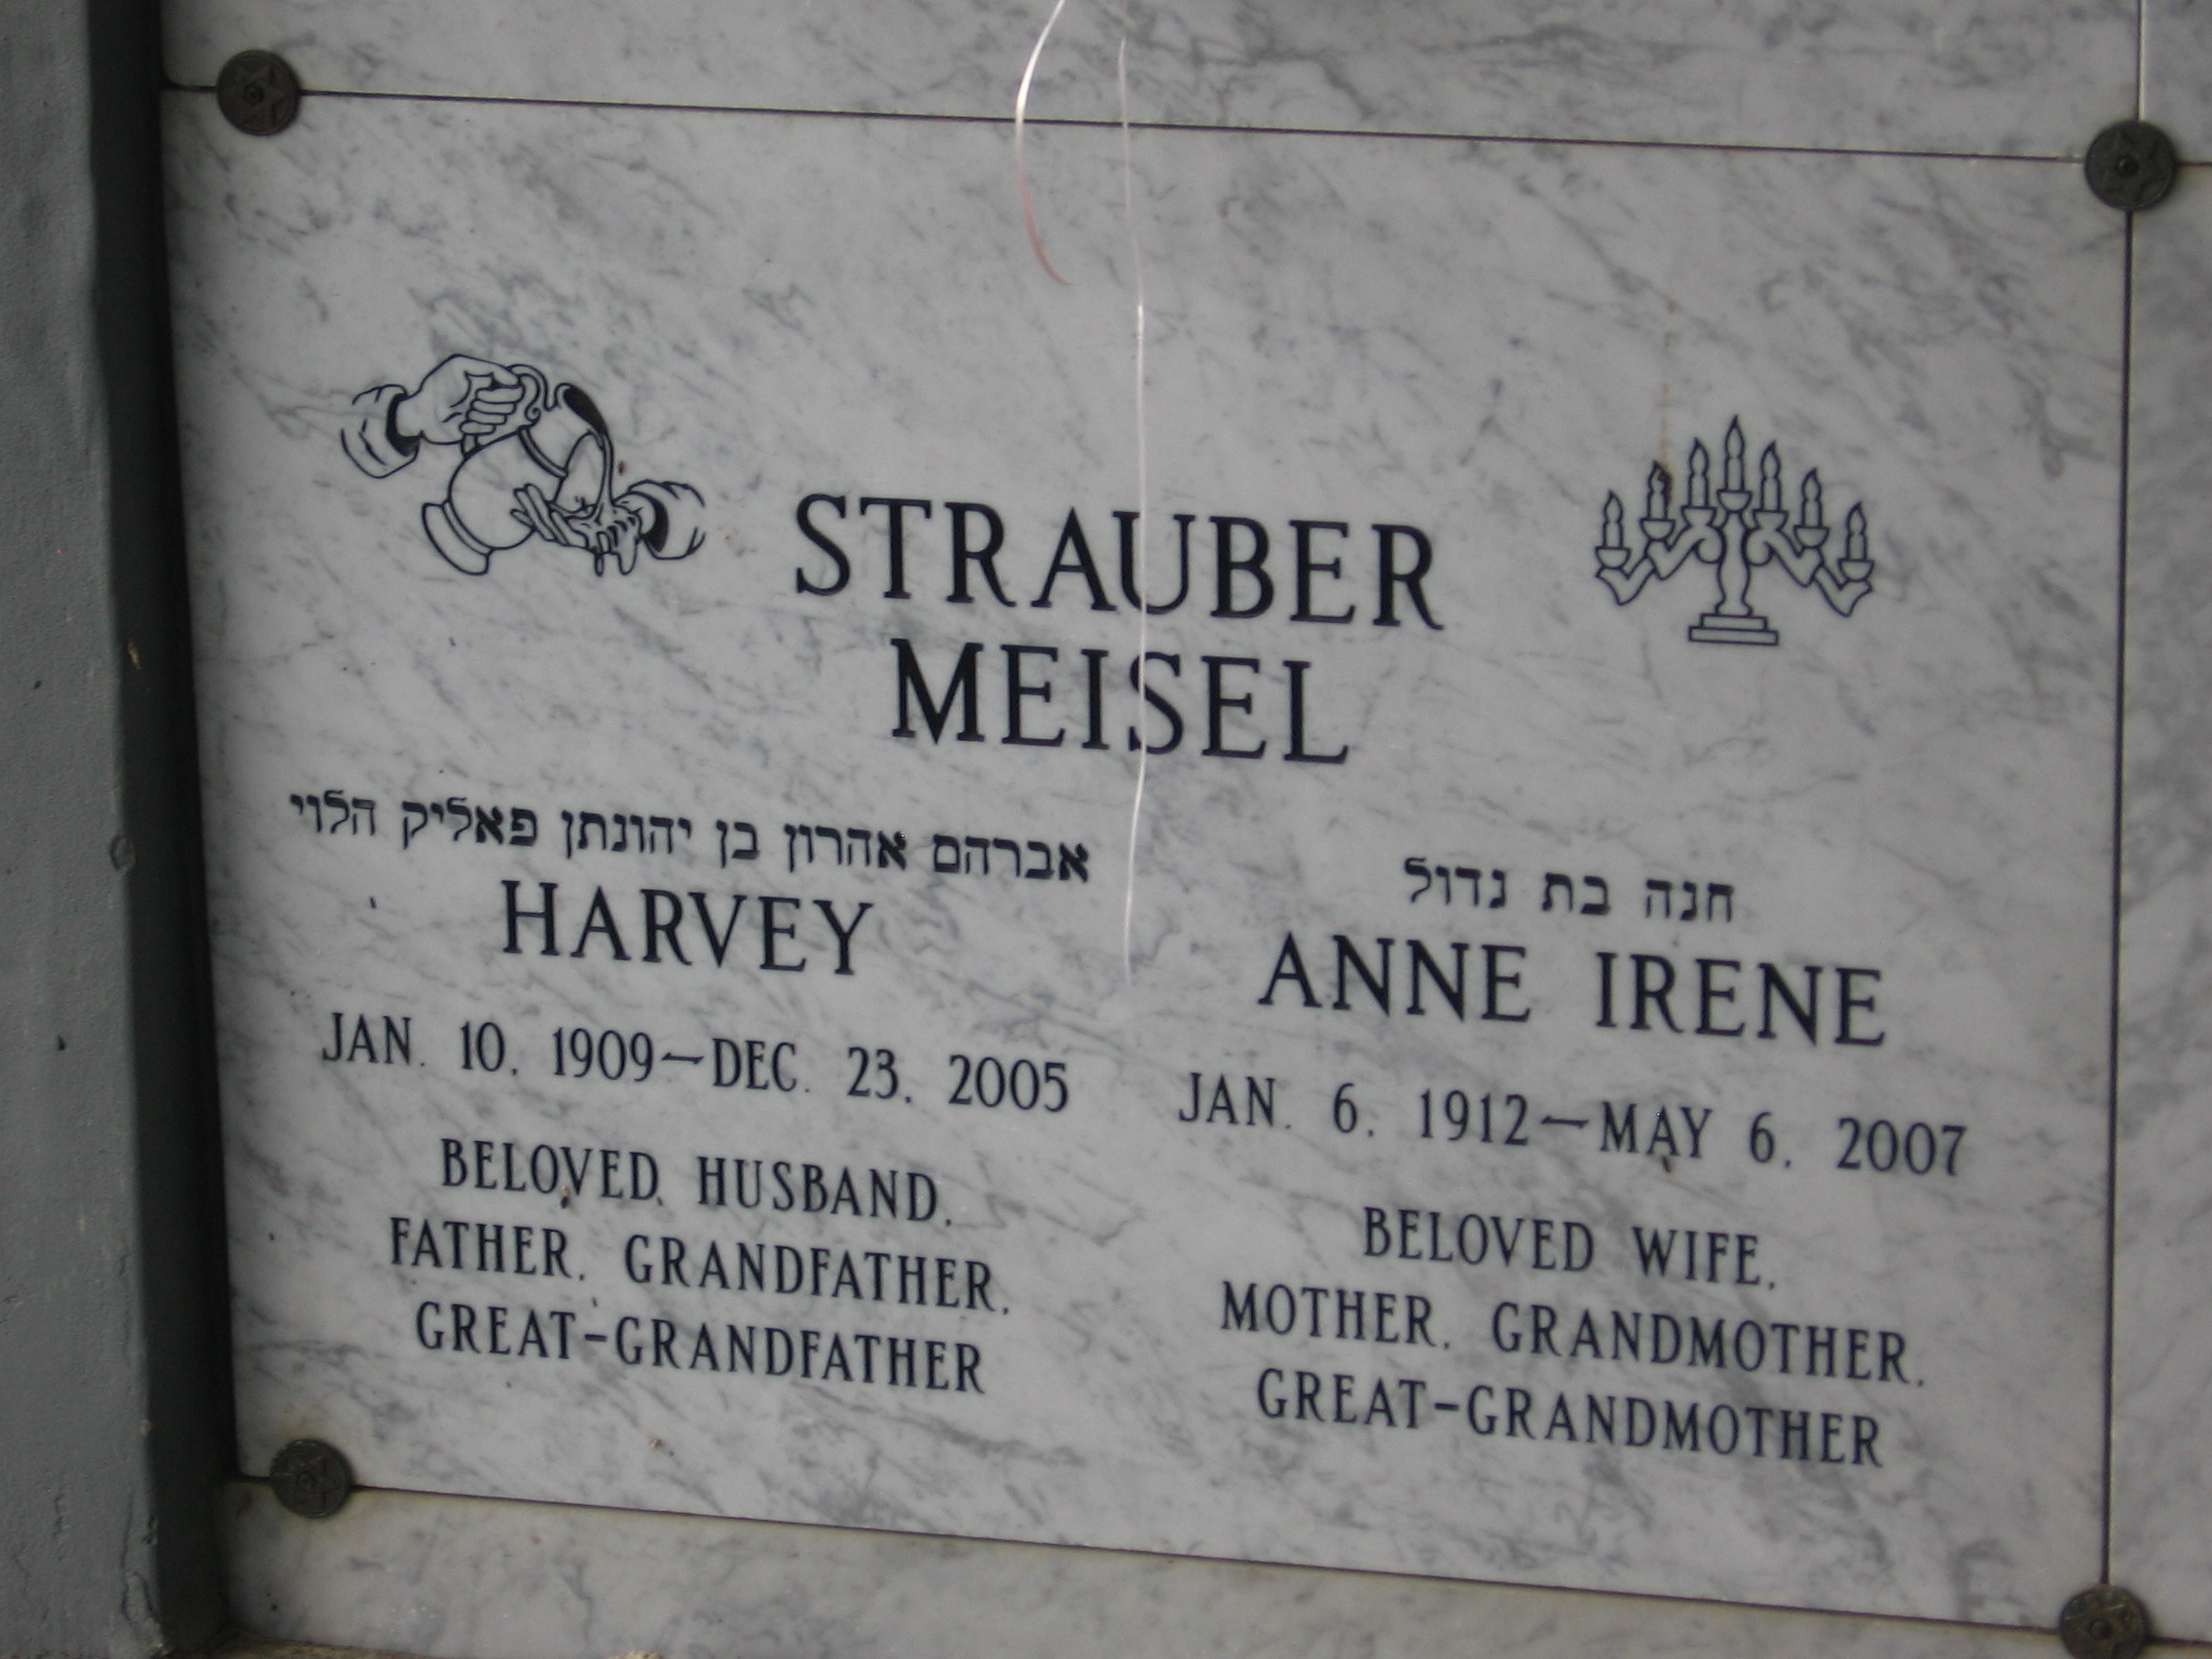 Anne Irene Strauber Meisel